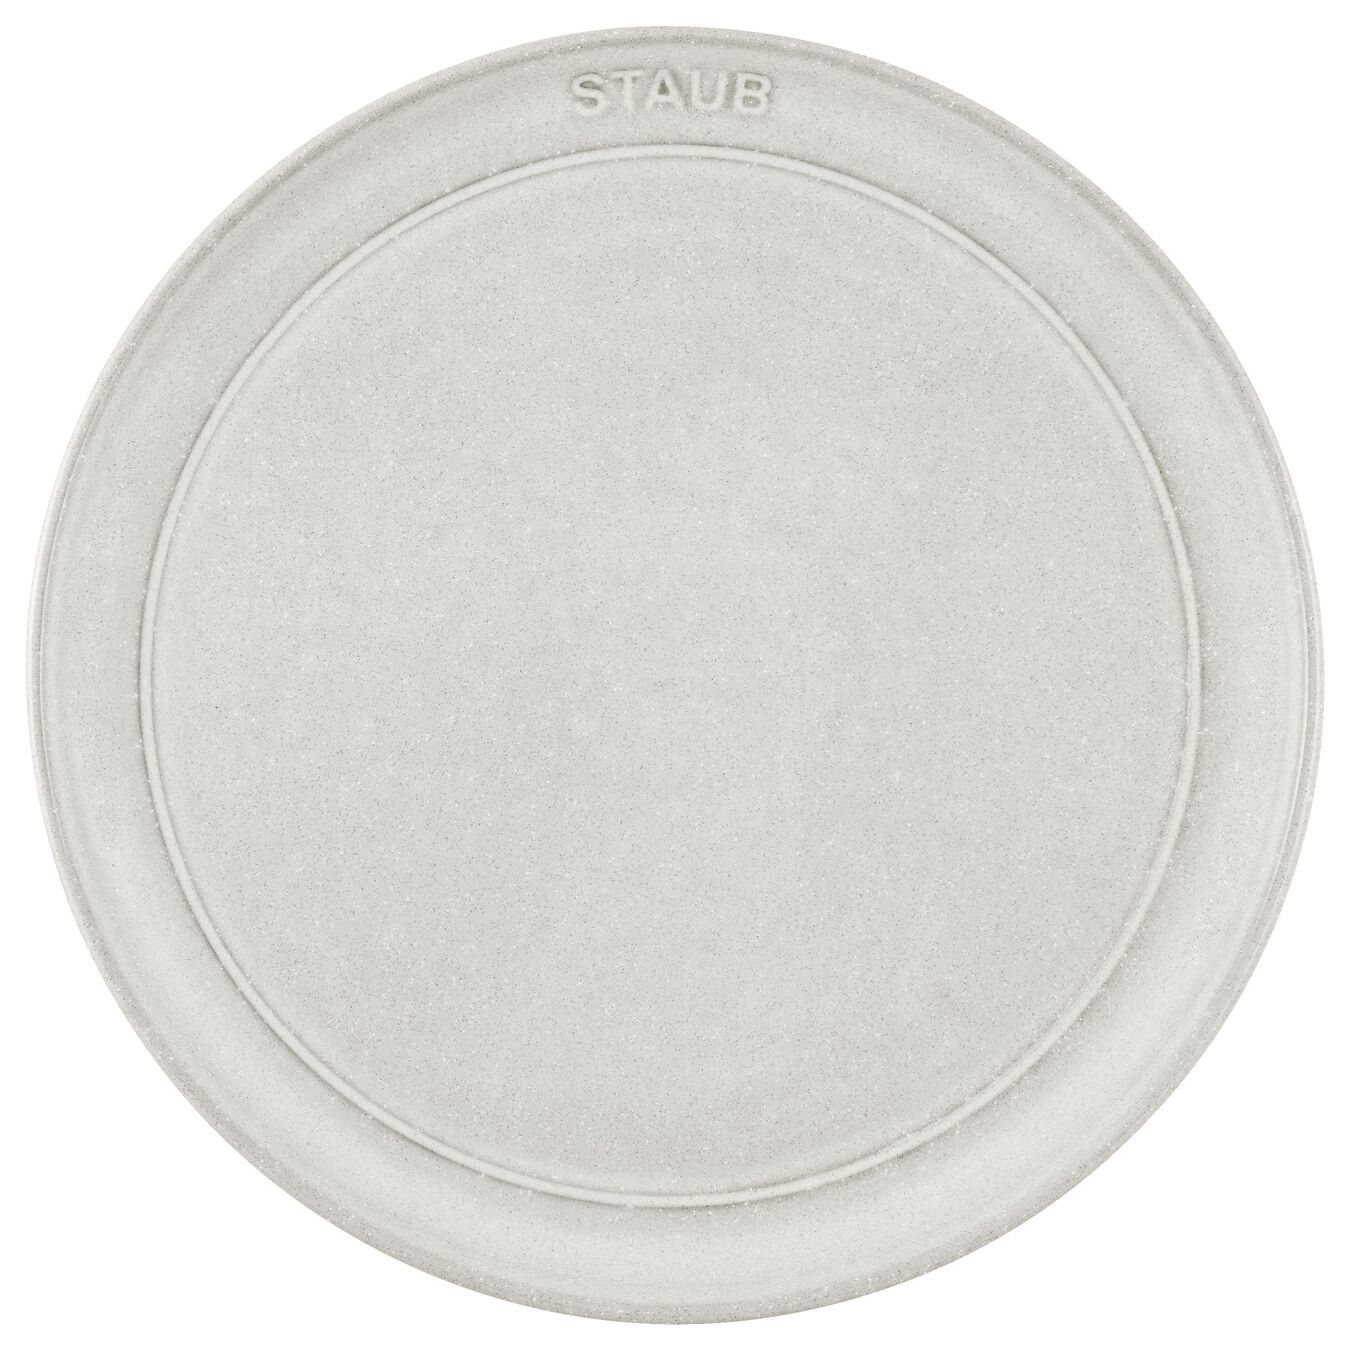 Prato plano 22 cm, Cerâmica, Branco trufado,,large 2